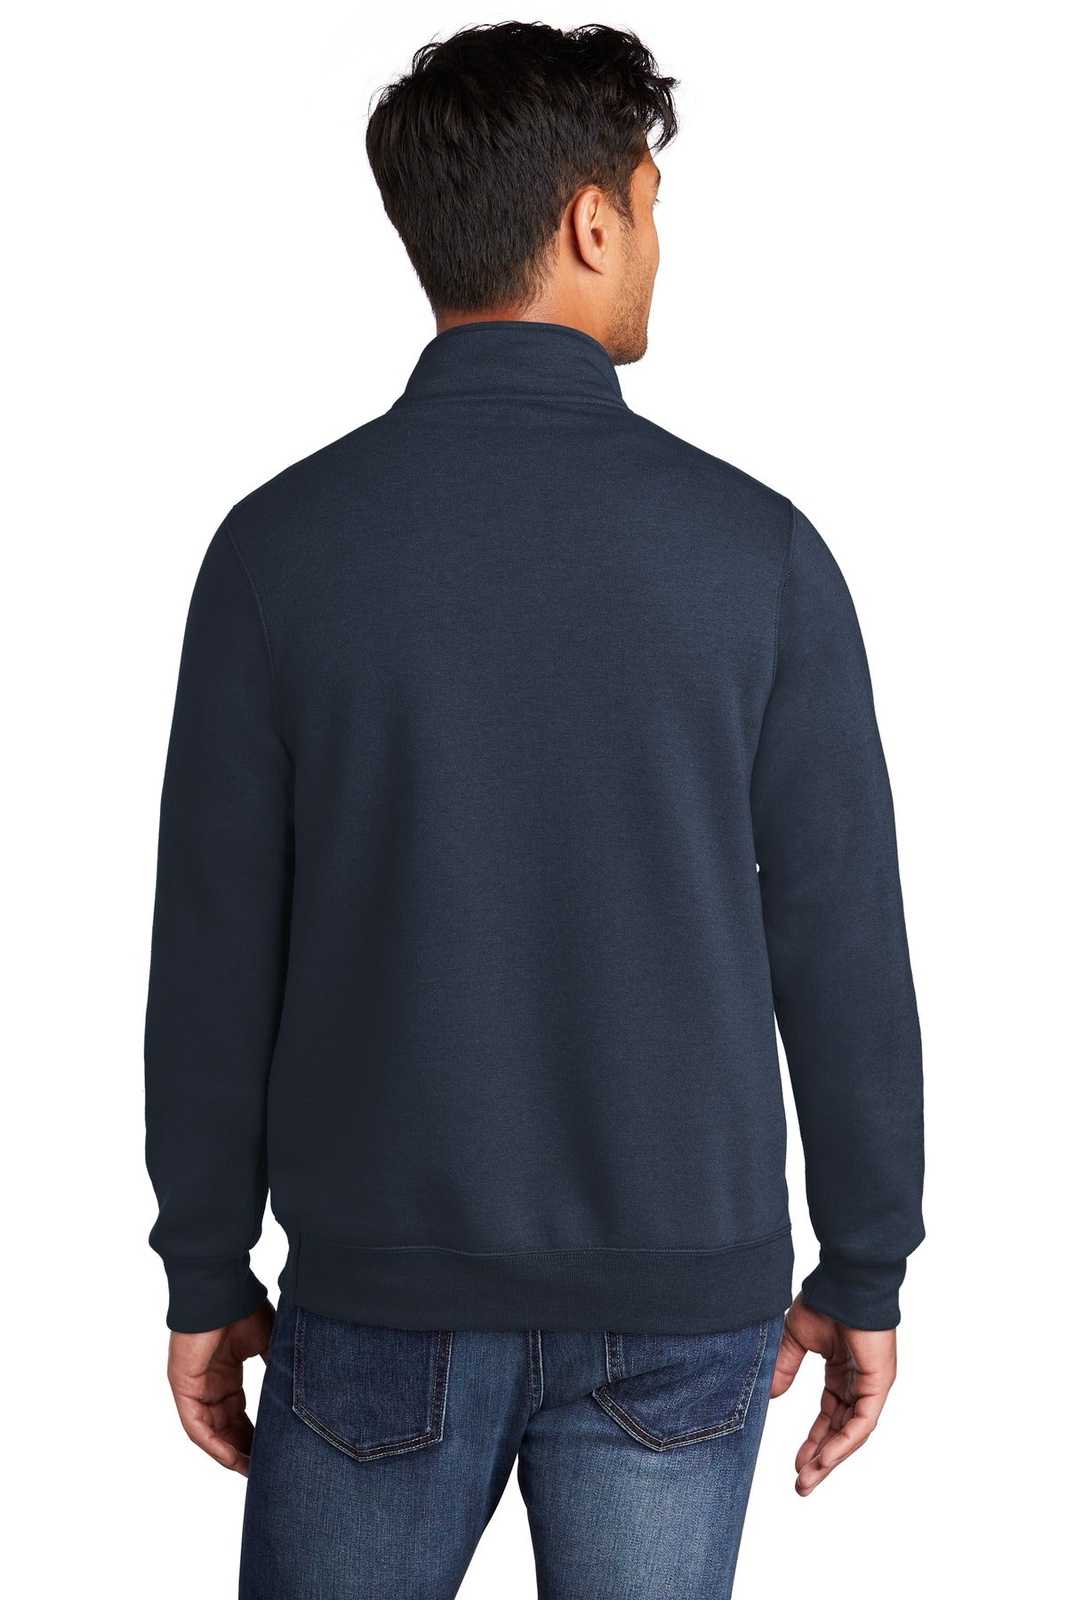 Port & Company PC78Q Core Fleece 1/4-Zip Pullover Sweatshirt - Navy - HIT a Double - 1